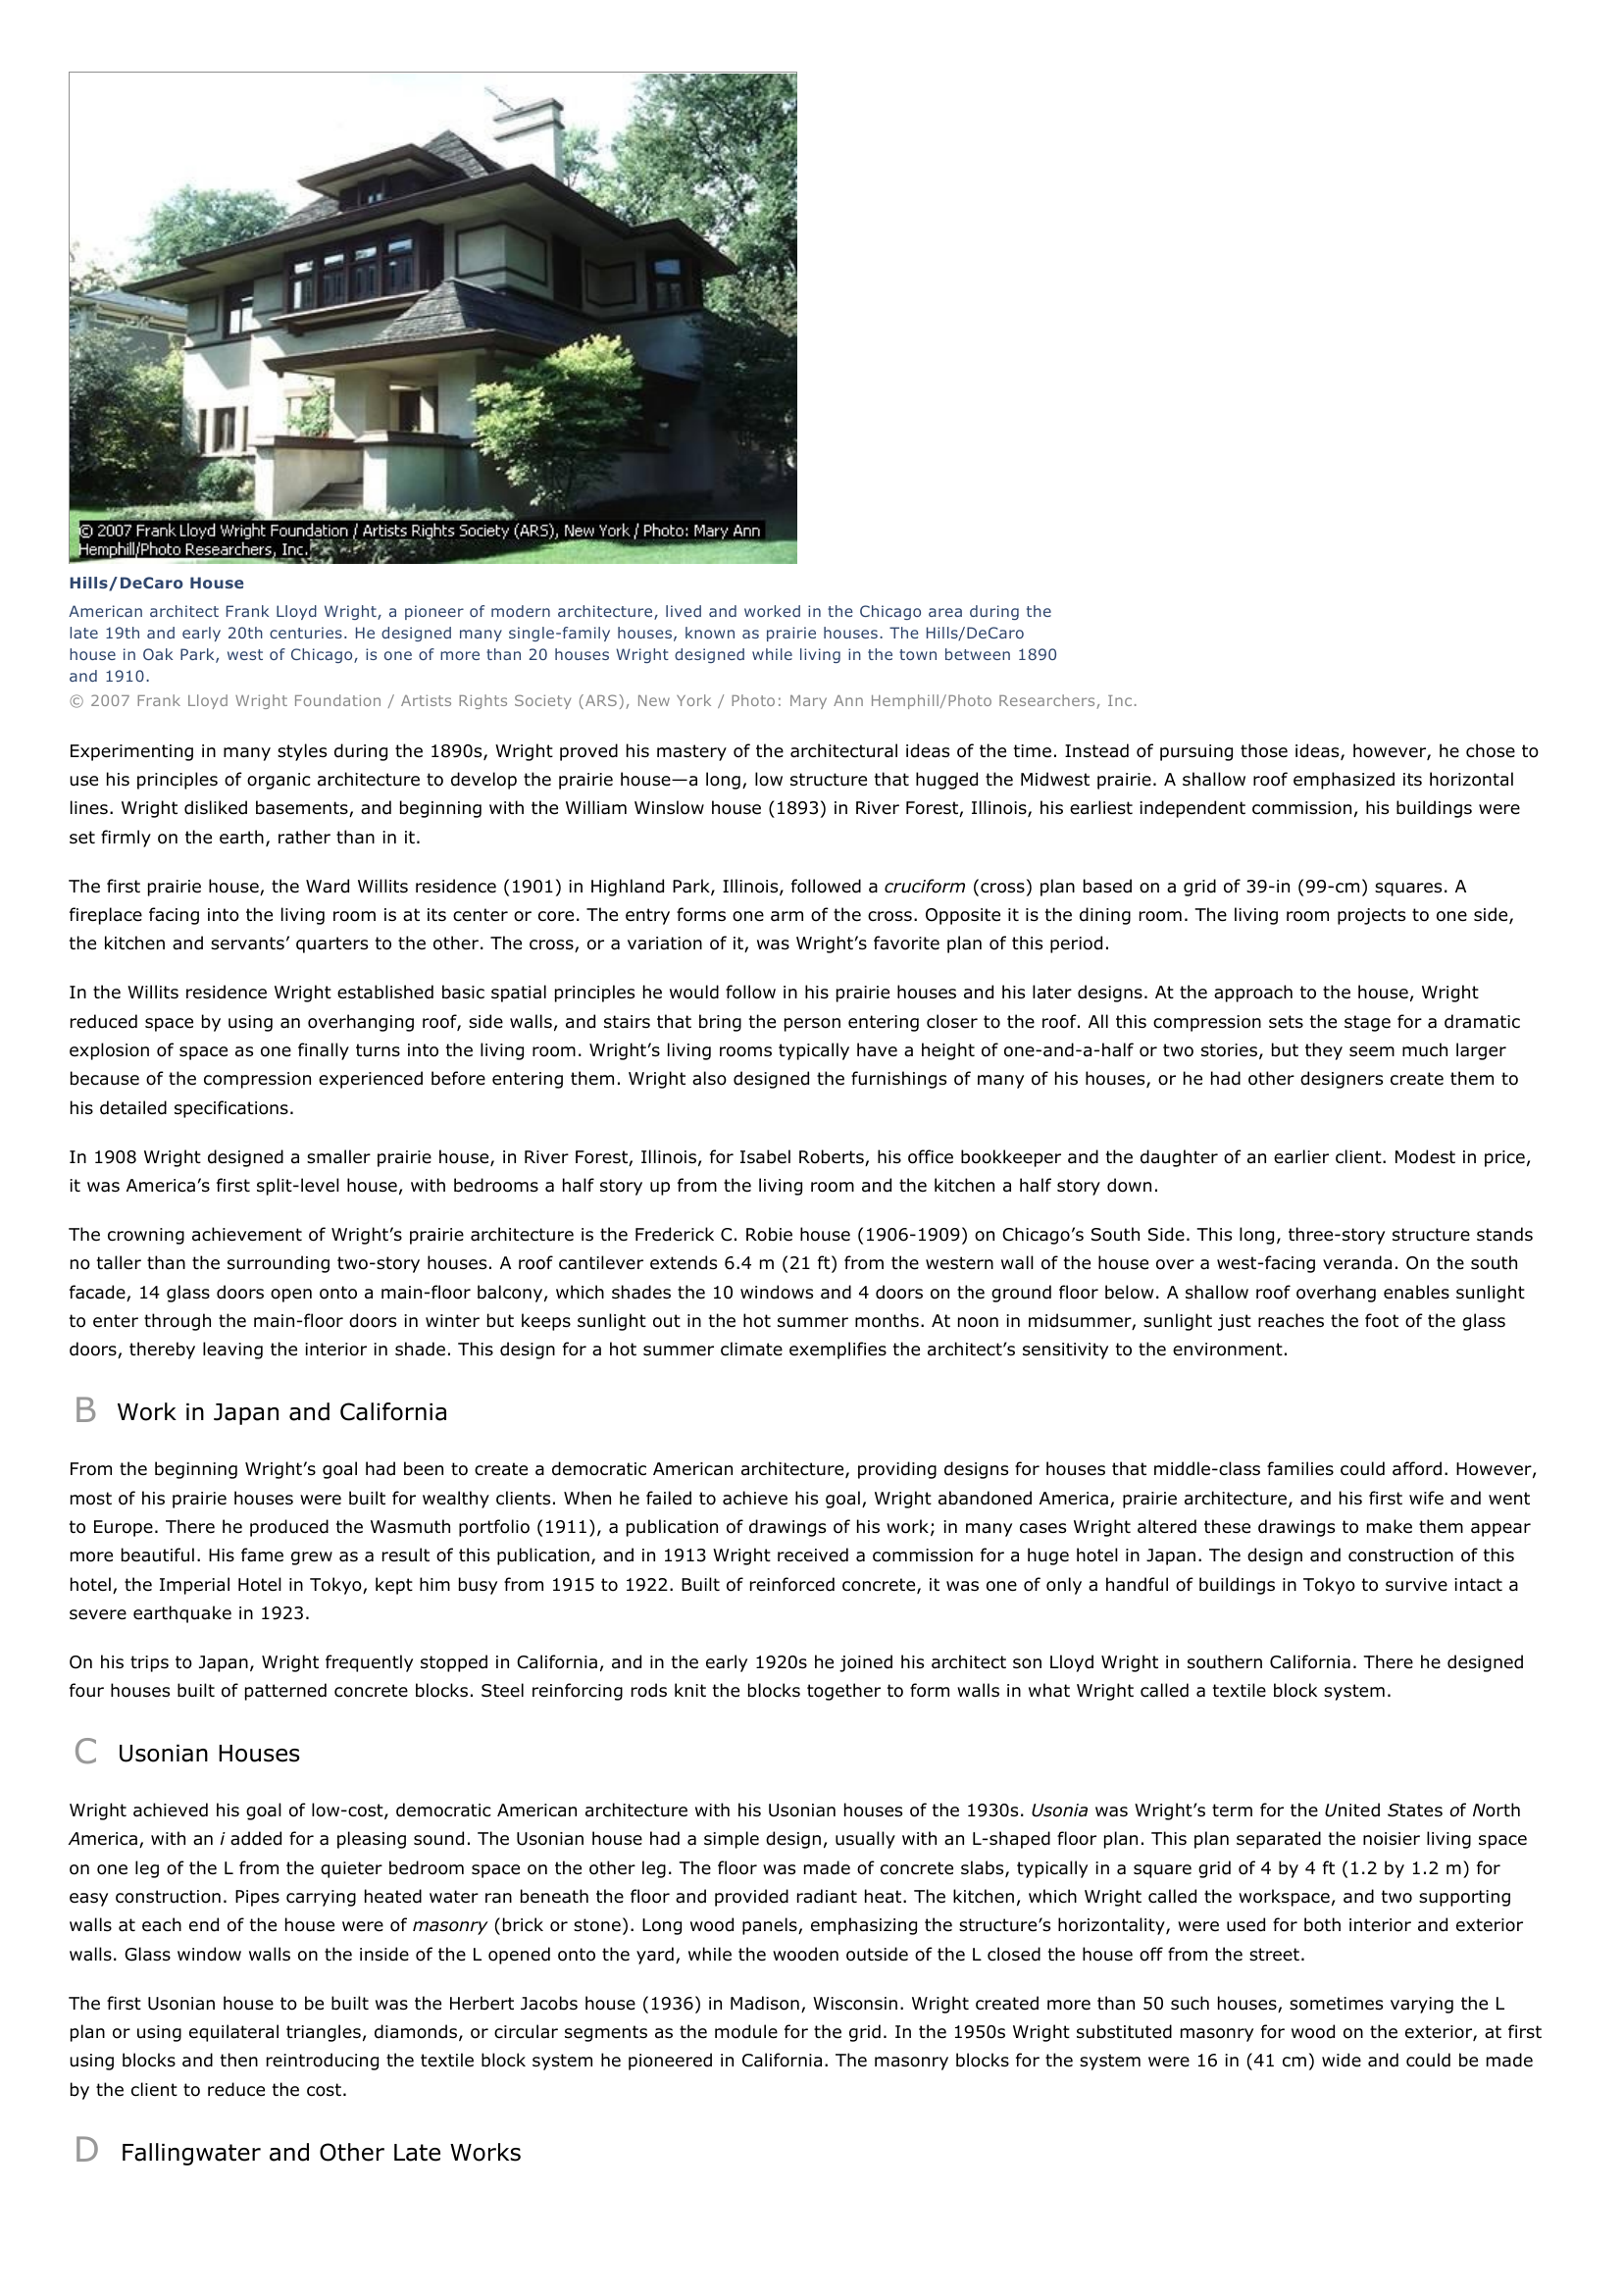 Prévisualisation du document Frank Lloyd Wright
I

INTRODUCTION

Robie House
The Frederick C.